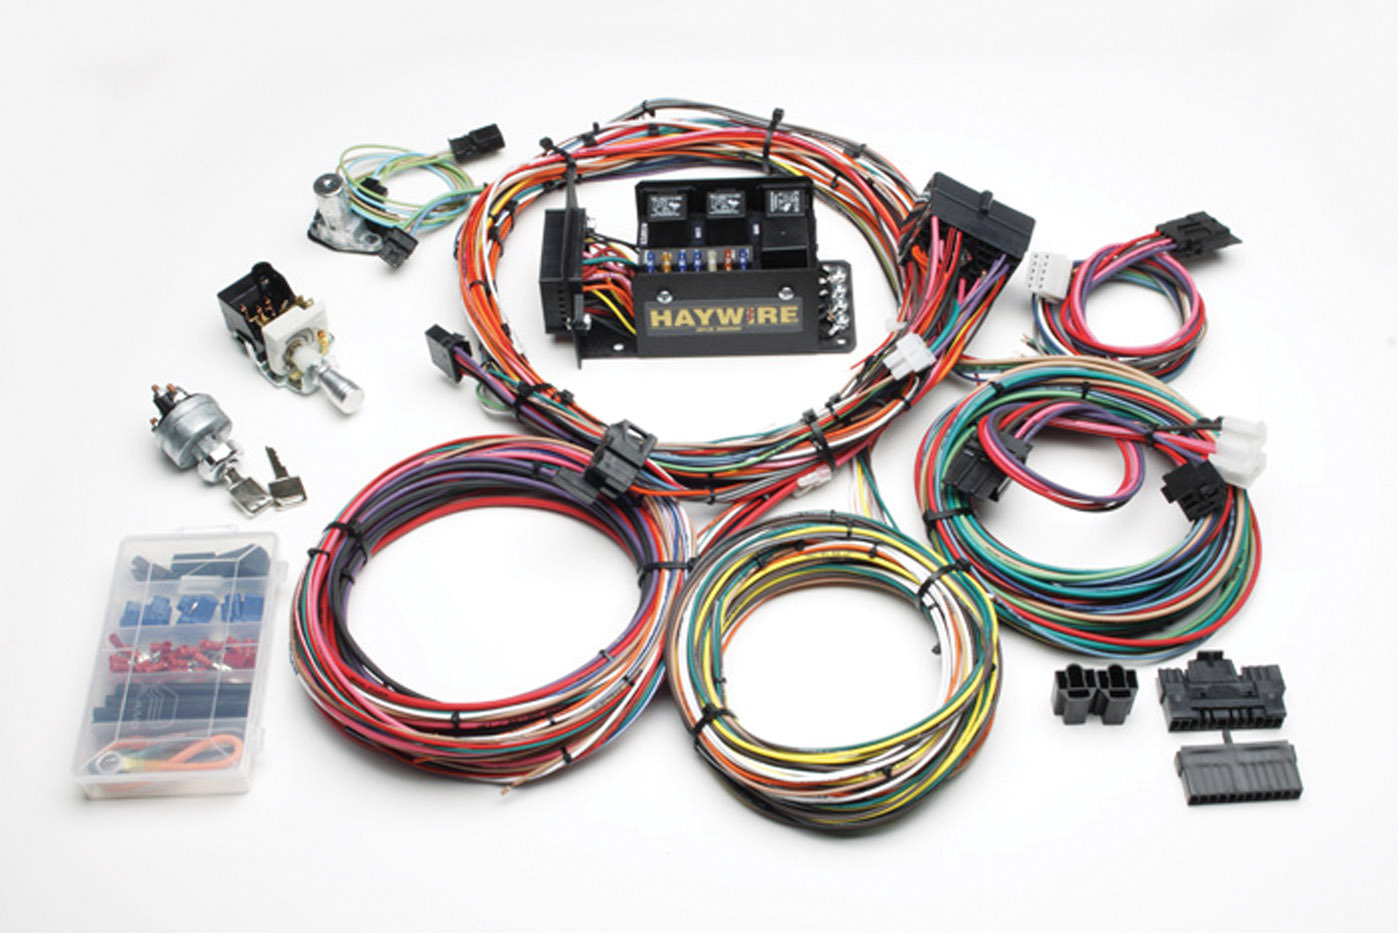 Cobra kit car wiring system from Haywire llc. | Rare Car Network